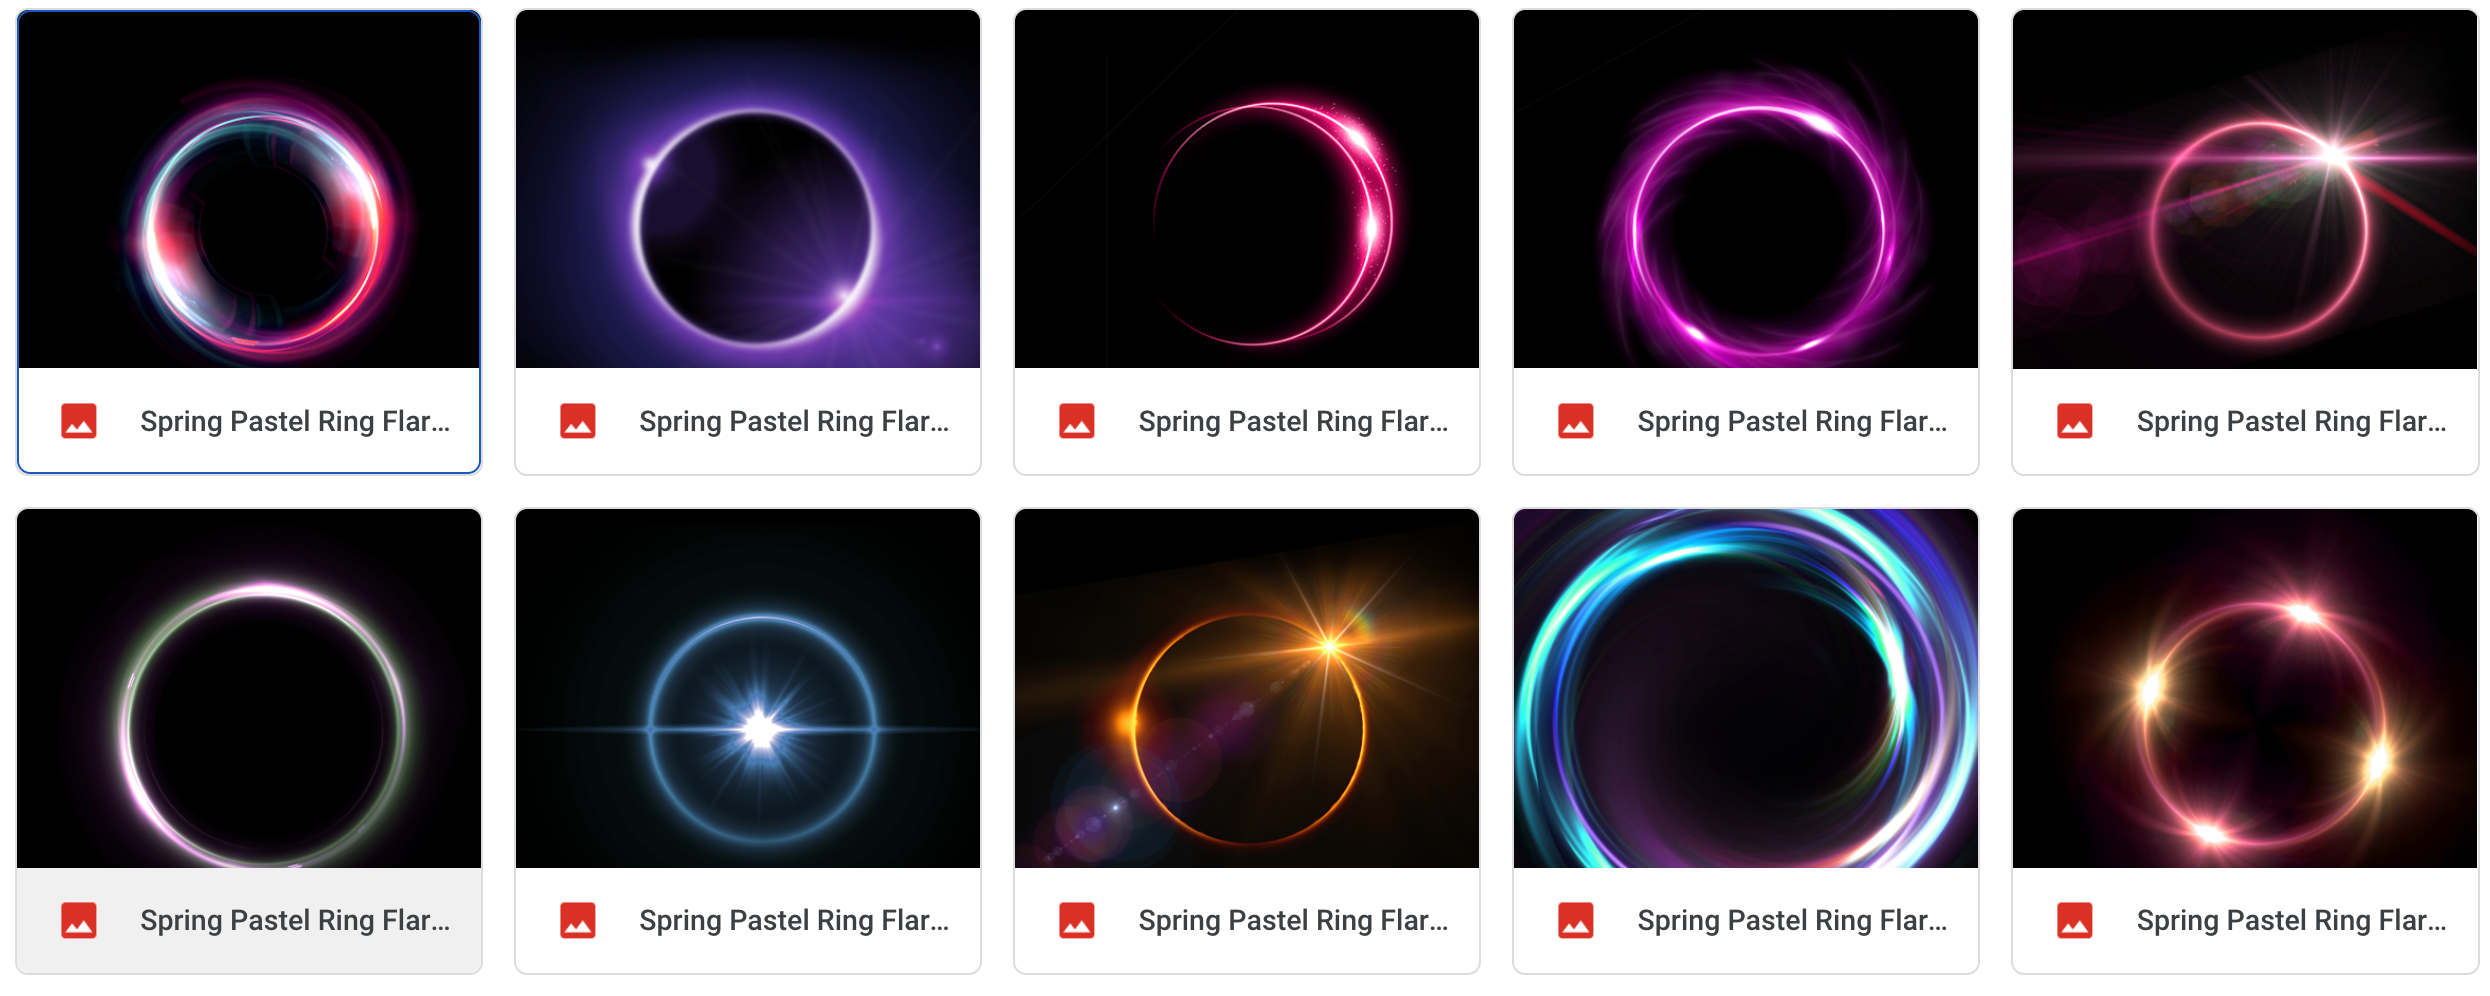 Magical Spring Pastel Ring Flares